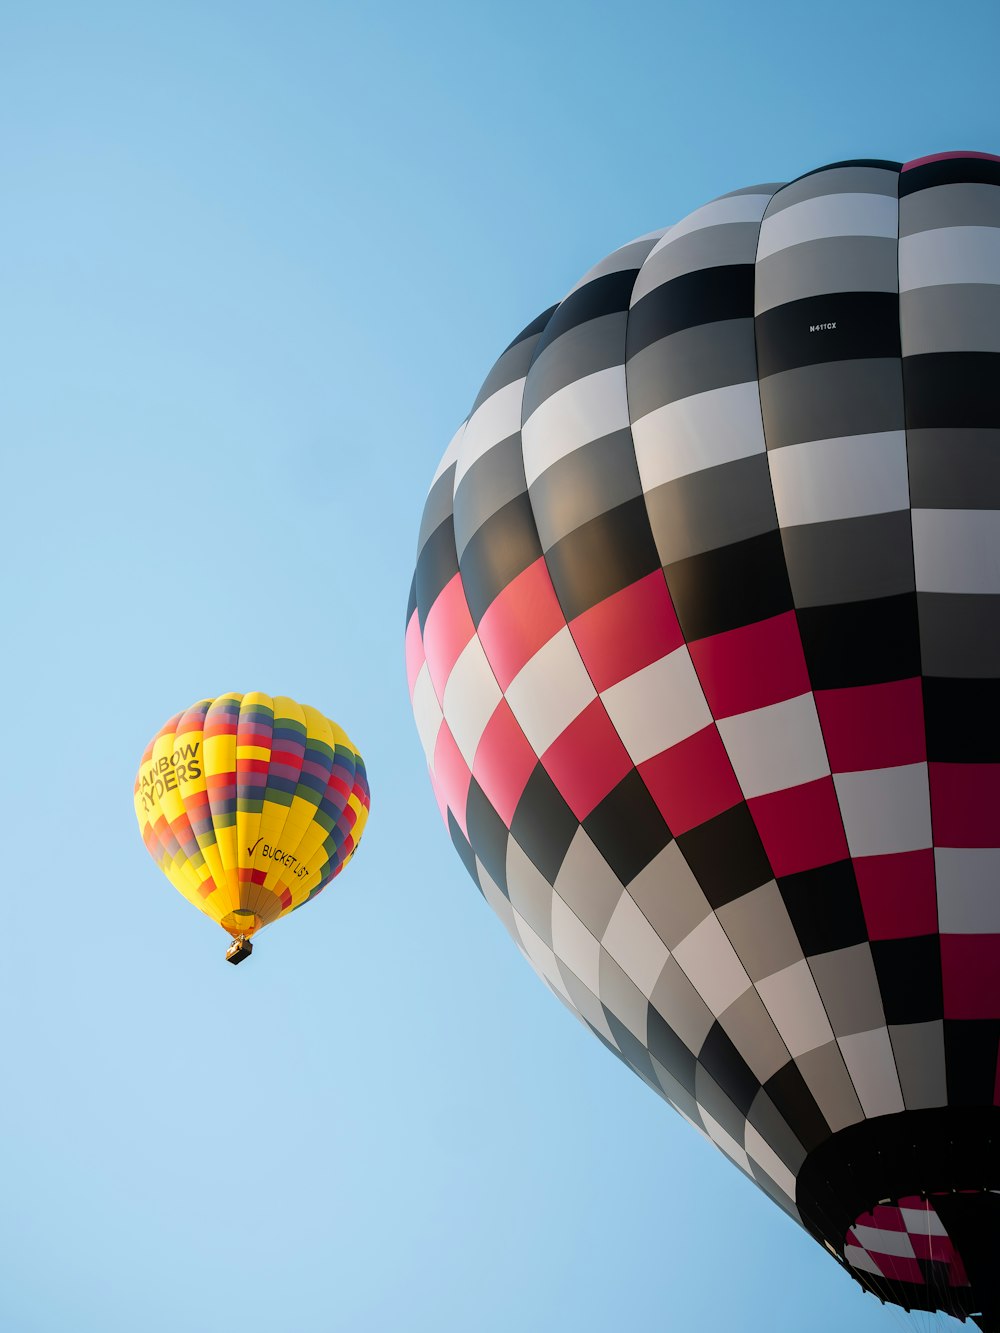 a couple of hot air balloons flying through a blue sky